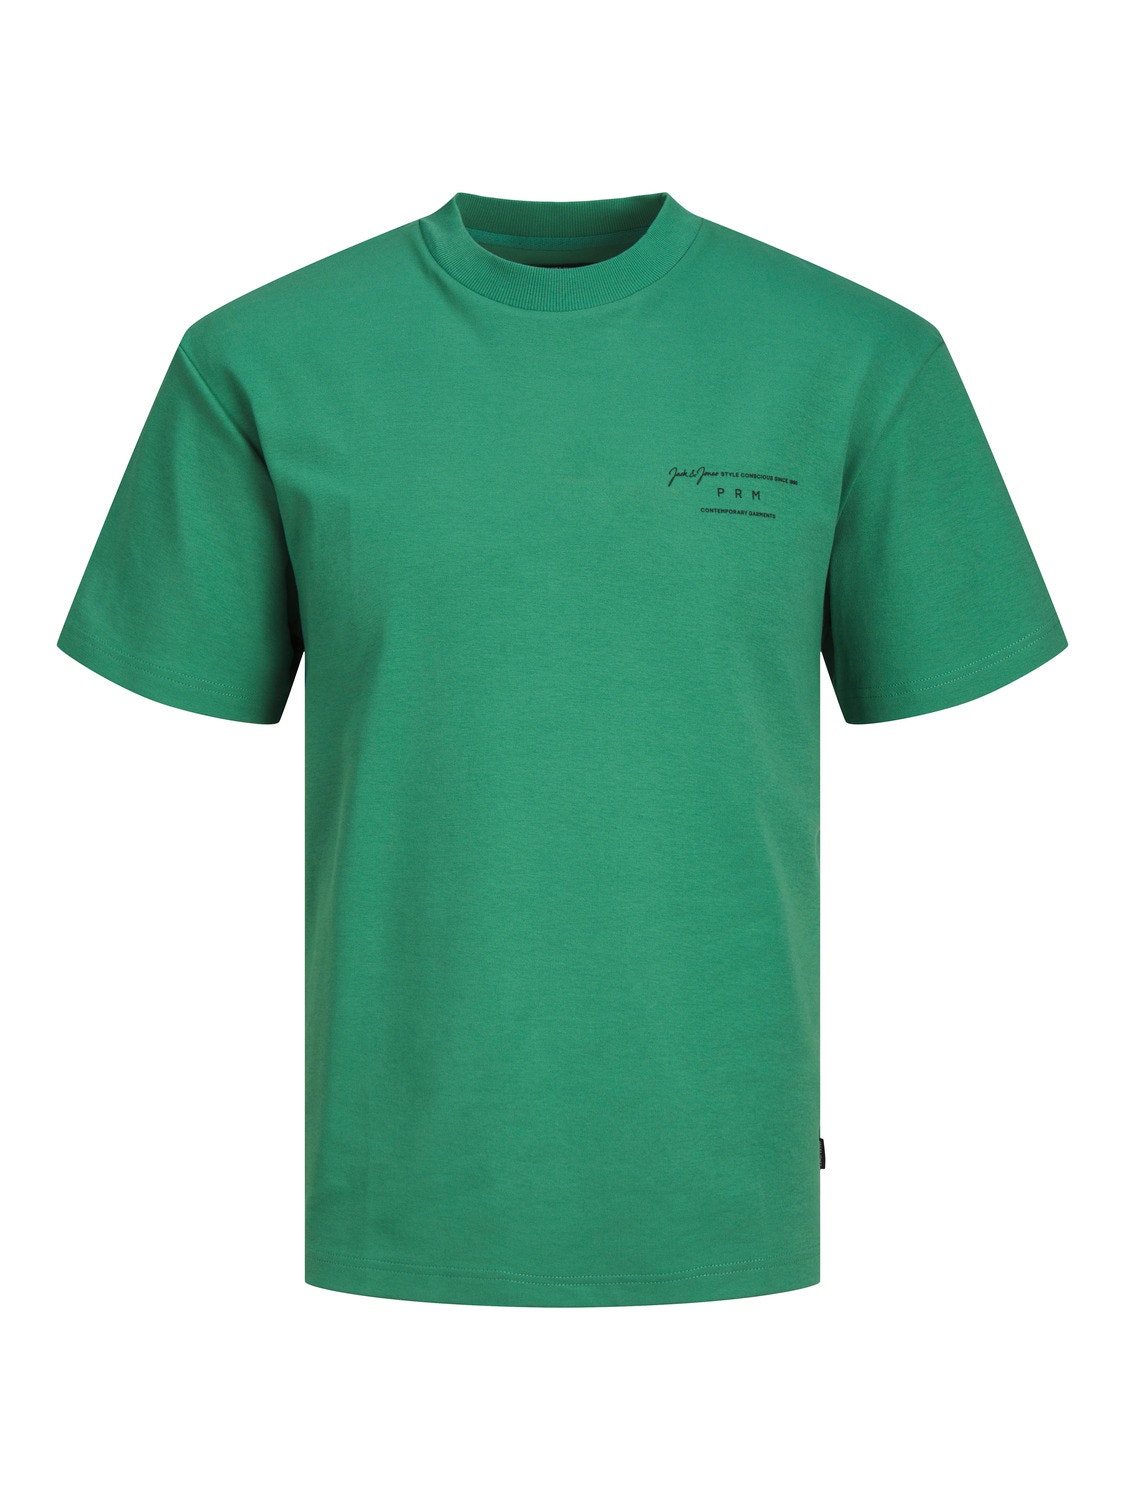 Jack & Jones Gedruckt Rundhals T-shirt -Bottle Green - 12245400